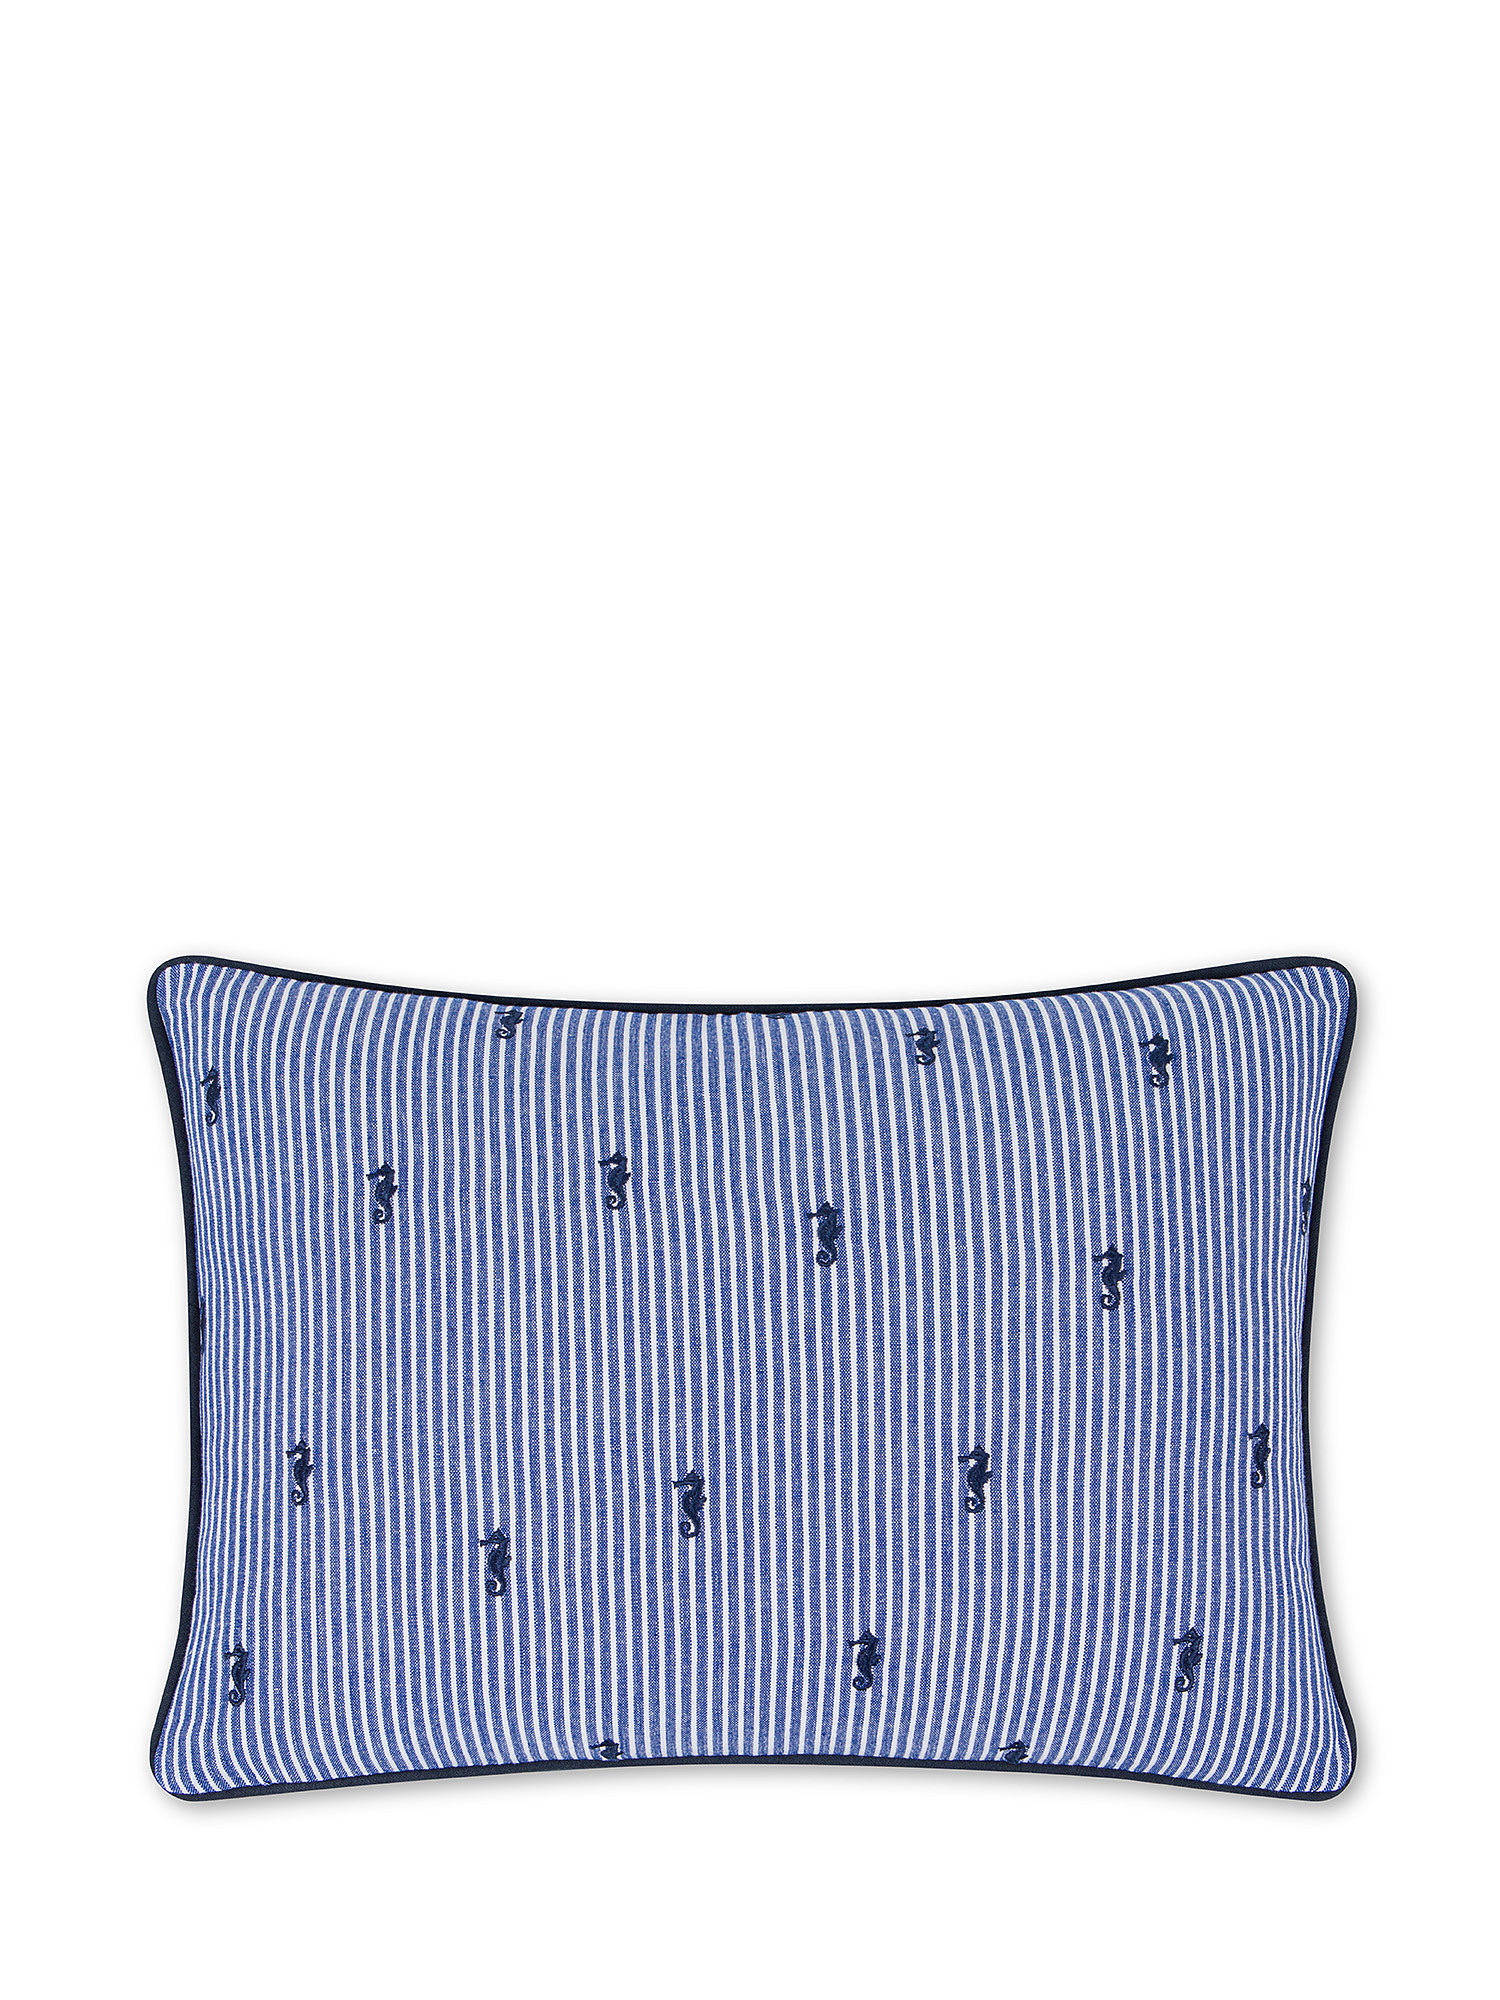 Cuscino 35X50 cm in cotone con ricami, Bianco/Blu, large image number 0